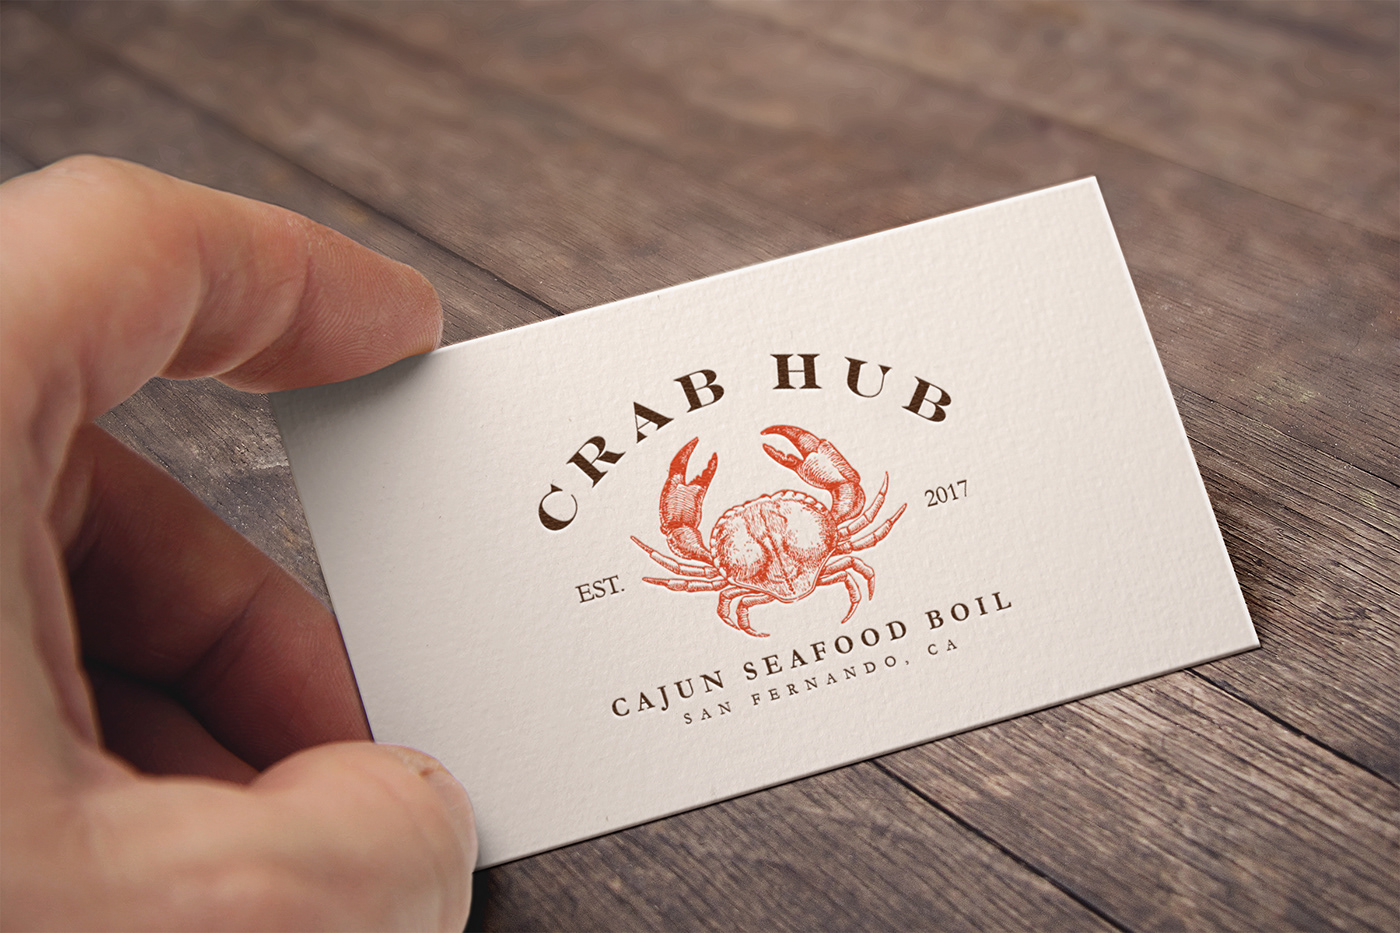 Crab Hub restaurant rustic vintage cajun industrial seafood Logo Design Logotype logo